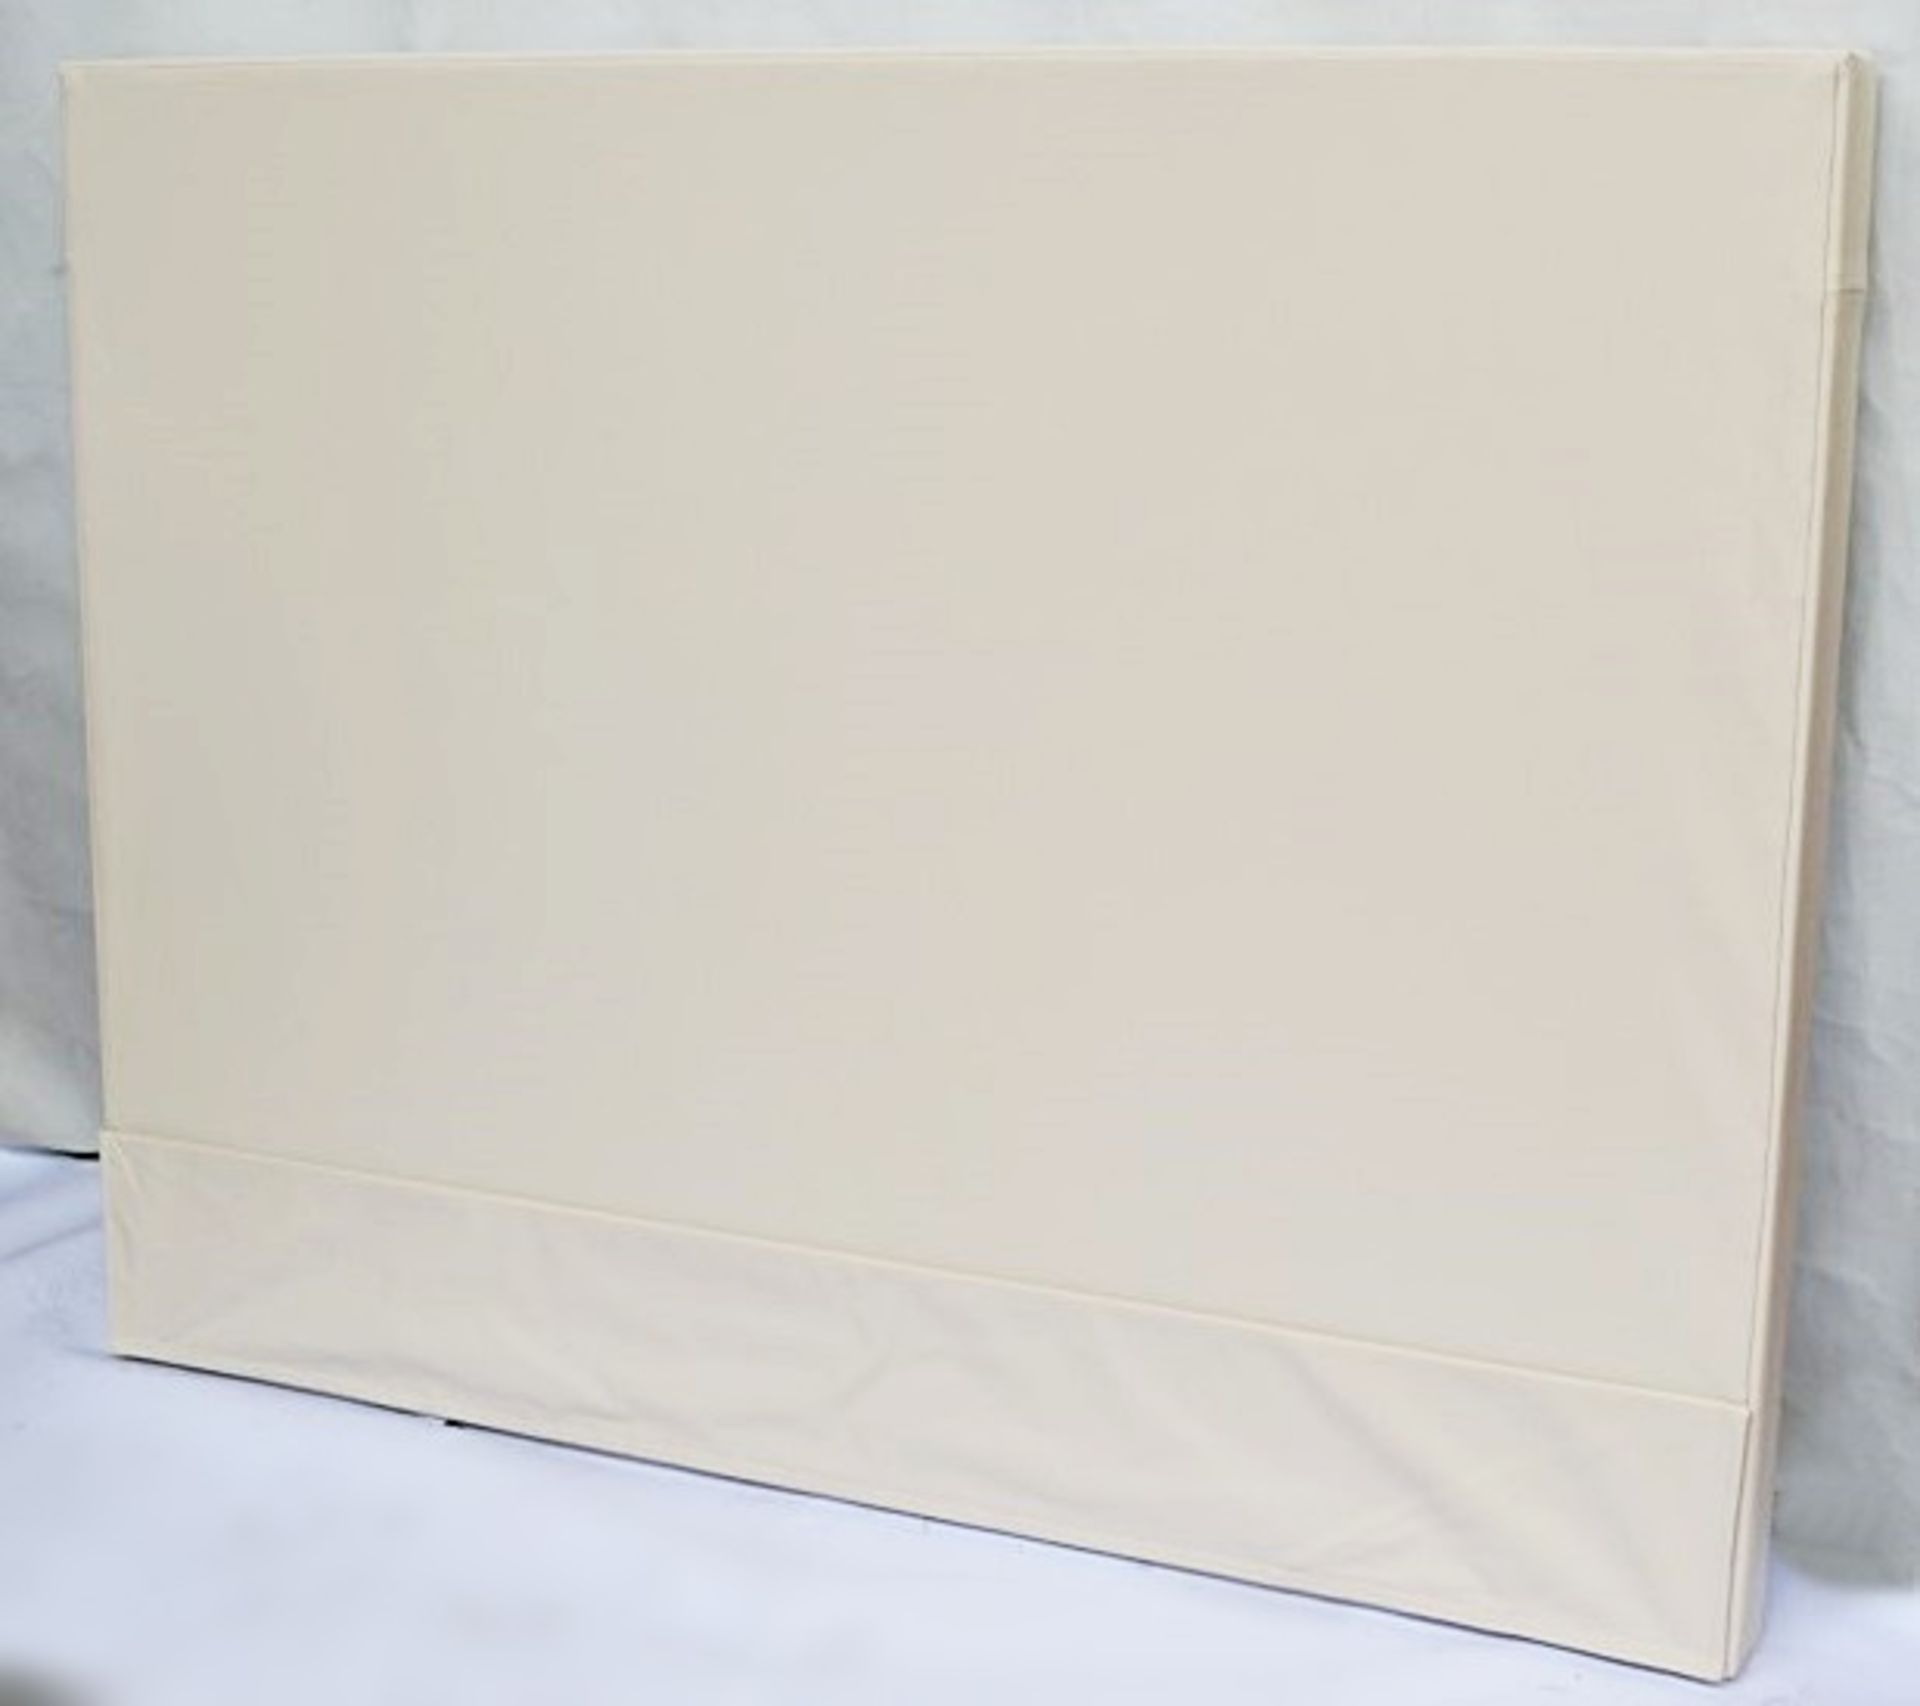 1 x VISPRING "Ceto" Cream Faux Leather Headboard - Dimensions: W182 x  x H140 x D12cm - Ref: 5014501 - Image 4 of 4